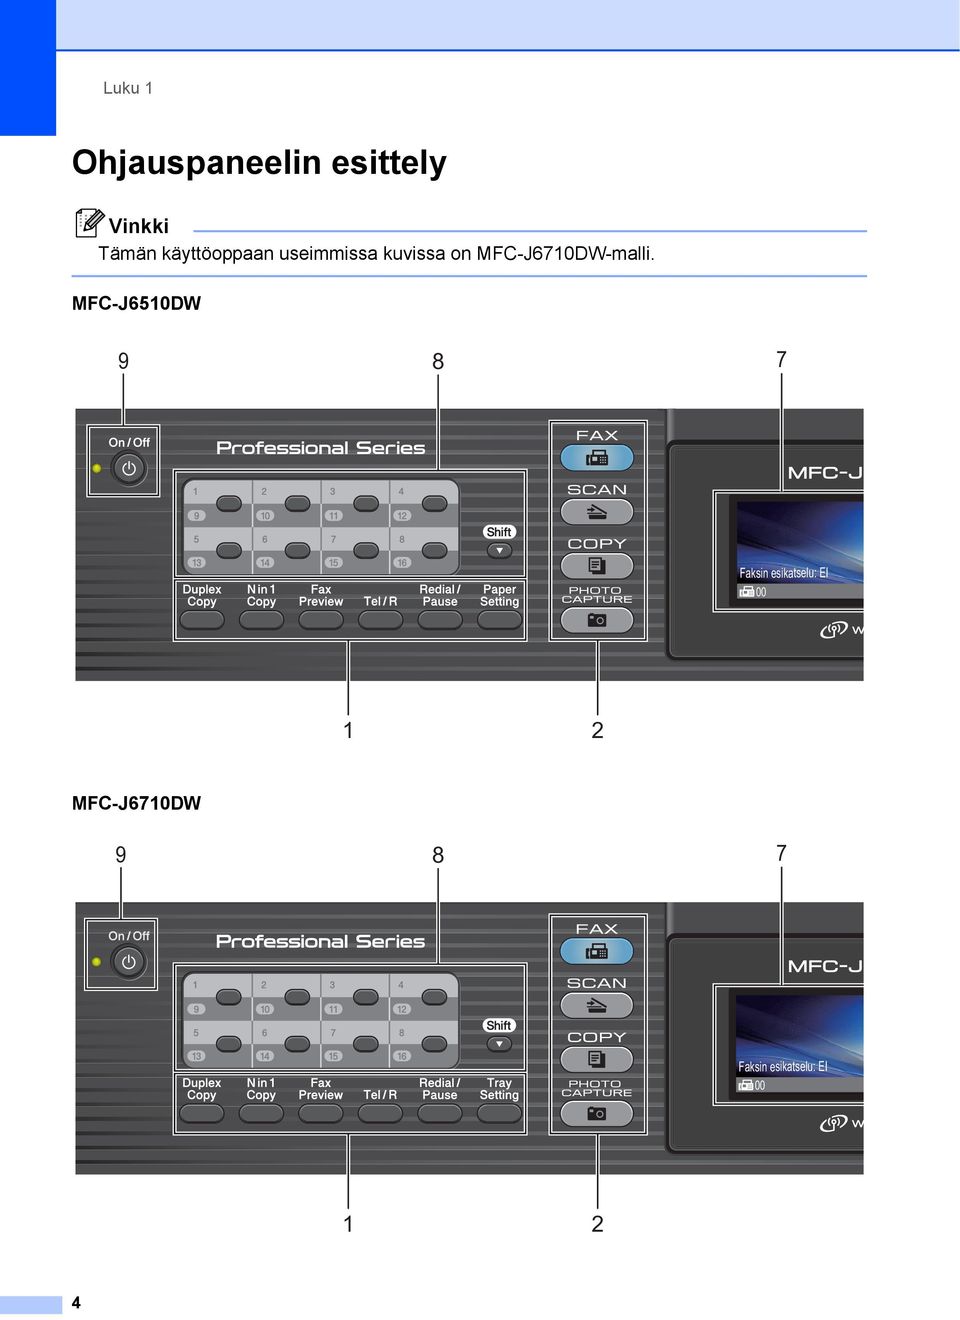 MFC-J650DW 9 8 7 Faksin esikatselu: EI Fax